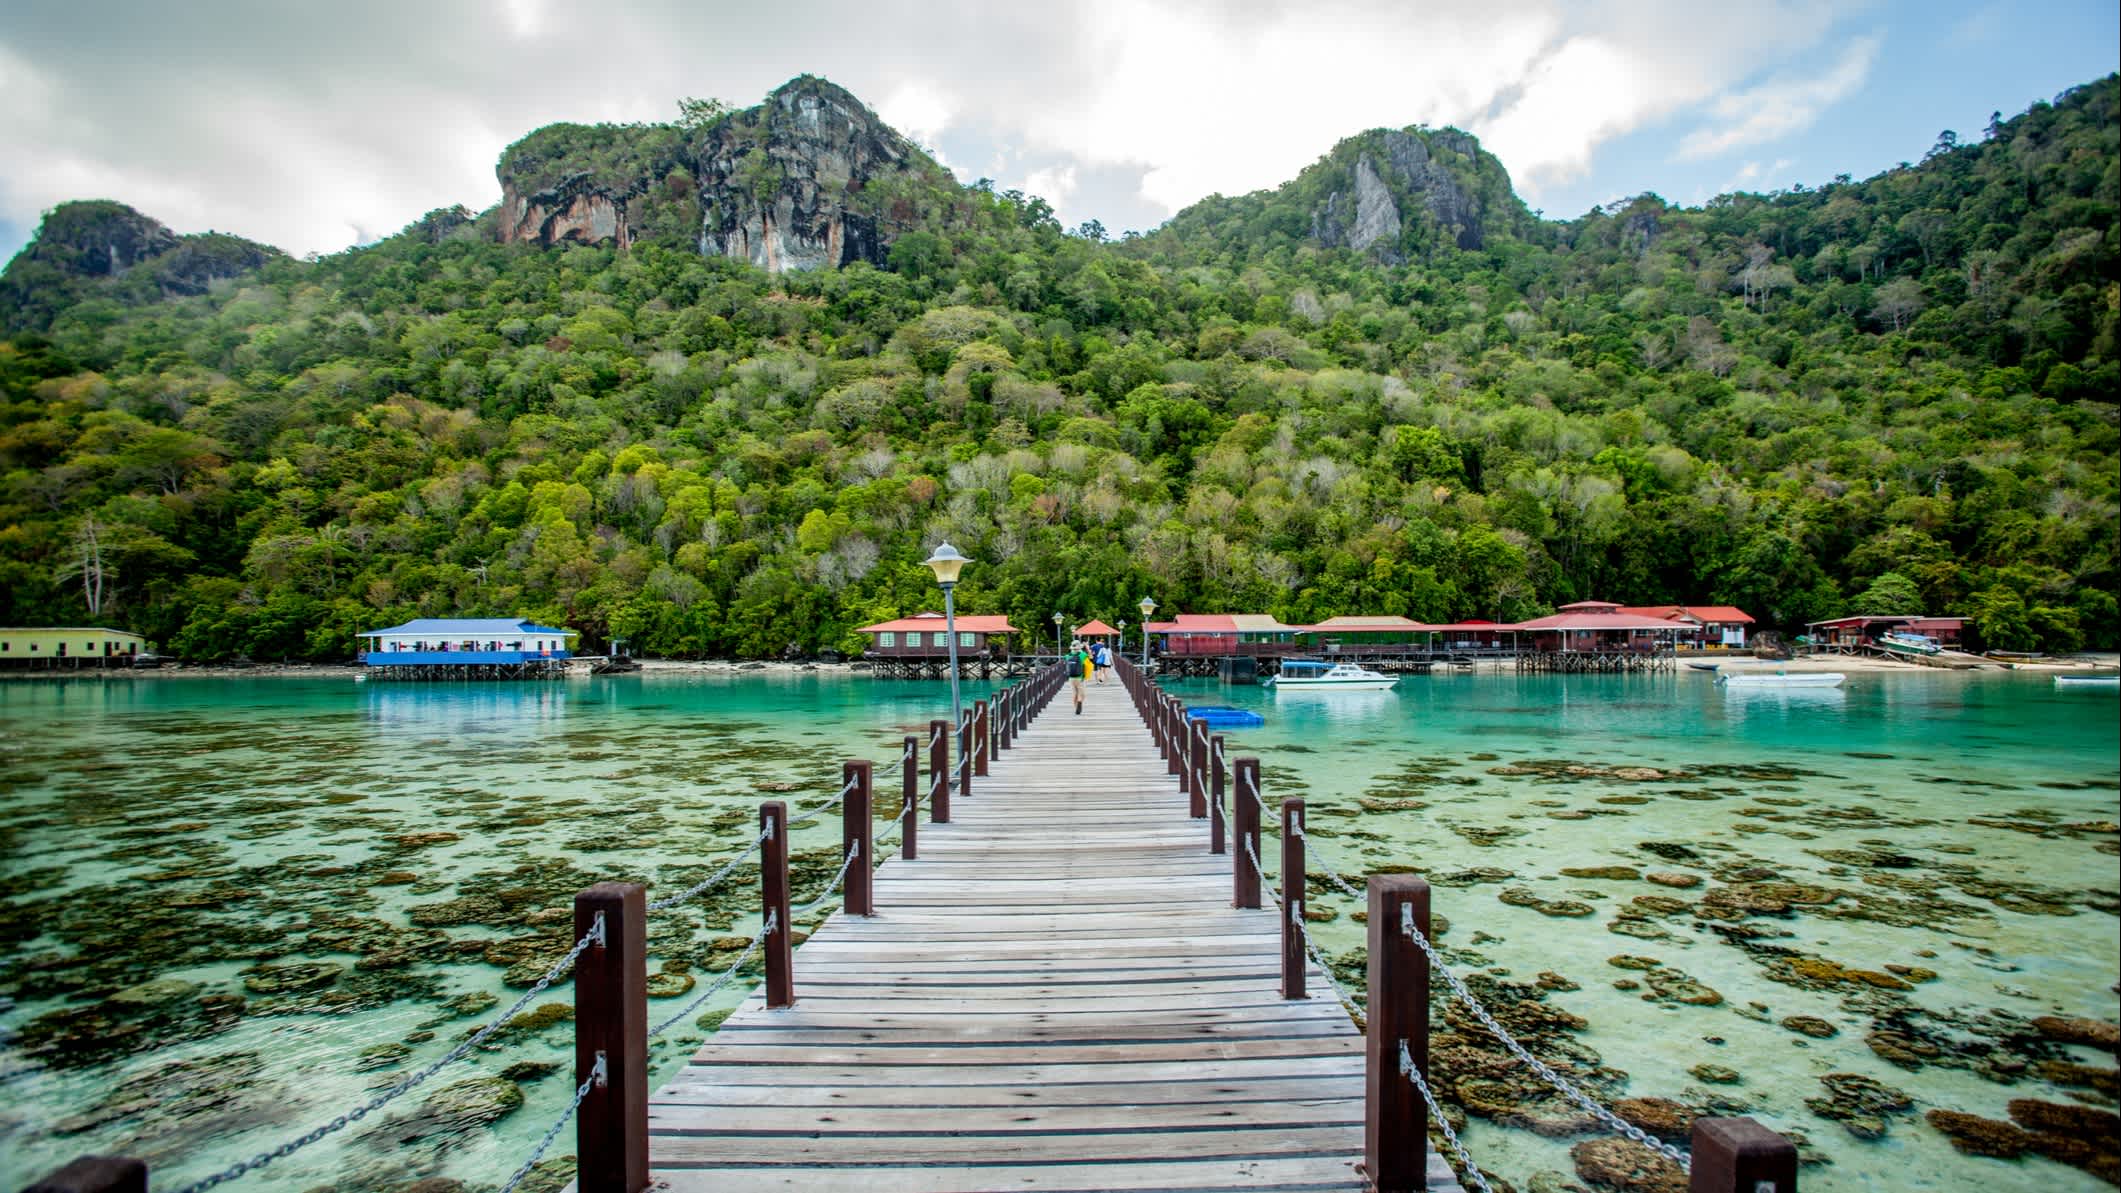 Steg in Richtung Bohey Dulang Island, Borneo, Malaysia. 

